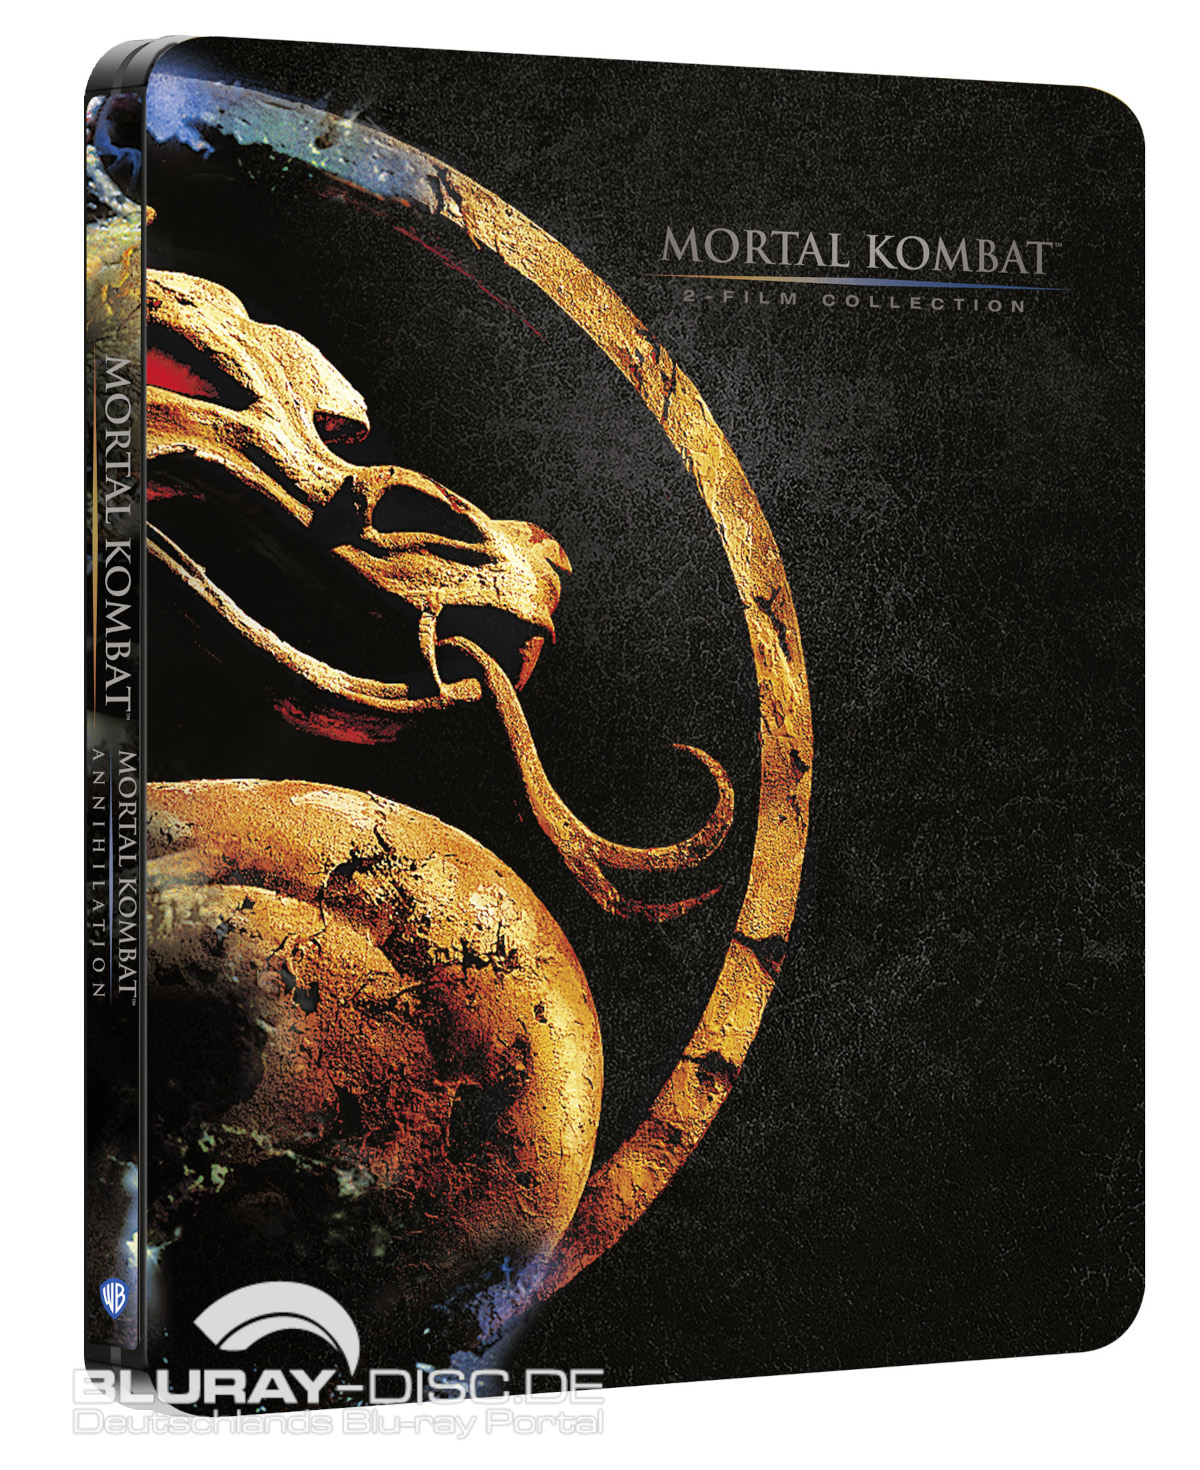 Mortal-Kombat-Collection-Steelbook-Galerie-01.jpg